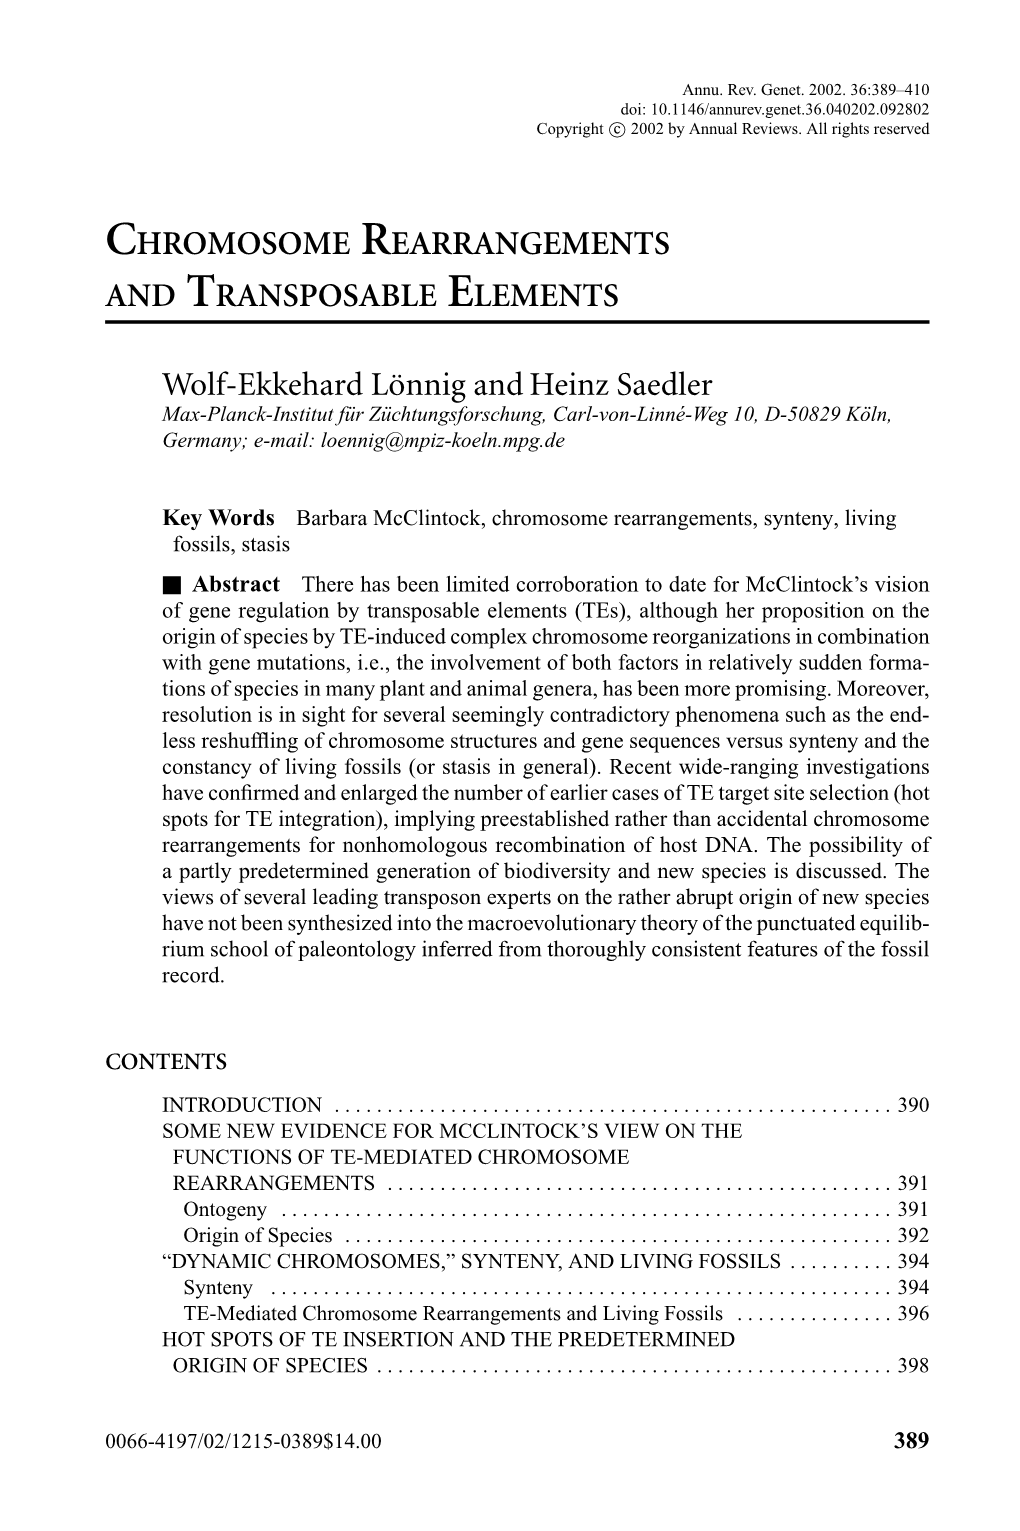 Chromosomal Rearrangements and Transposable Elements